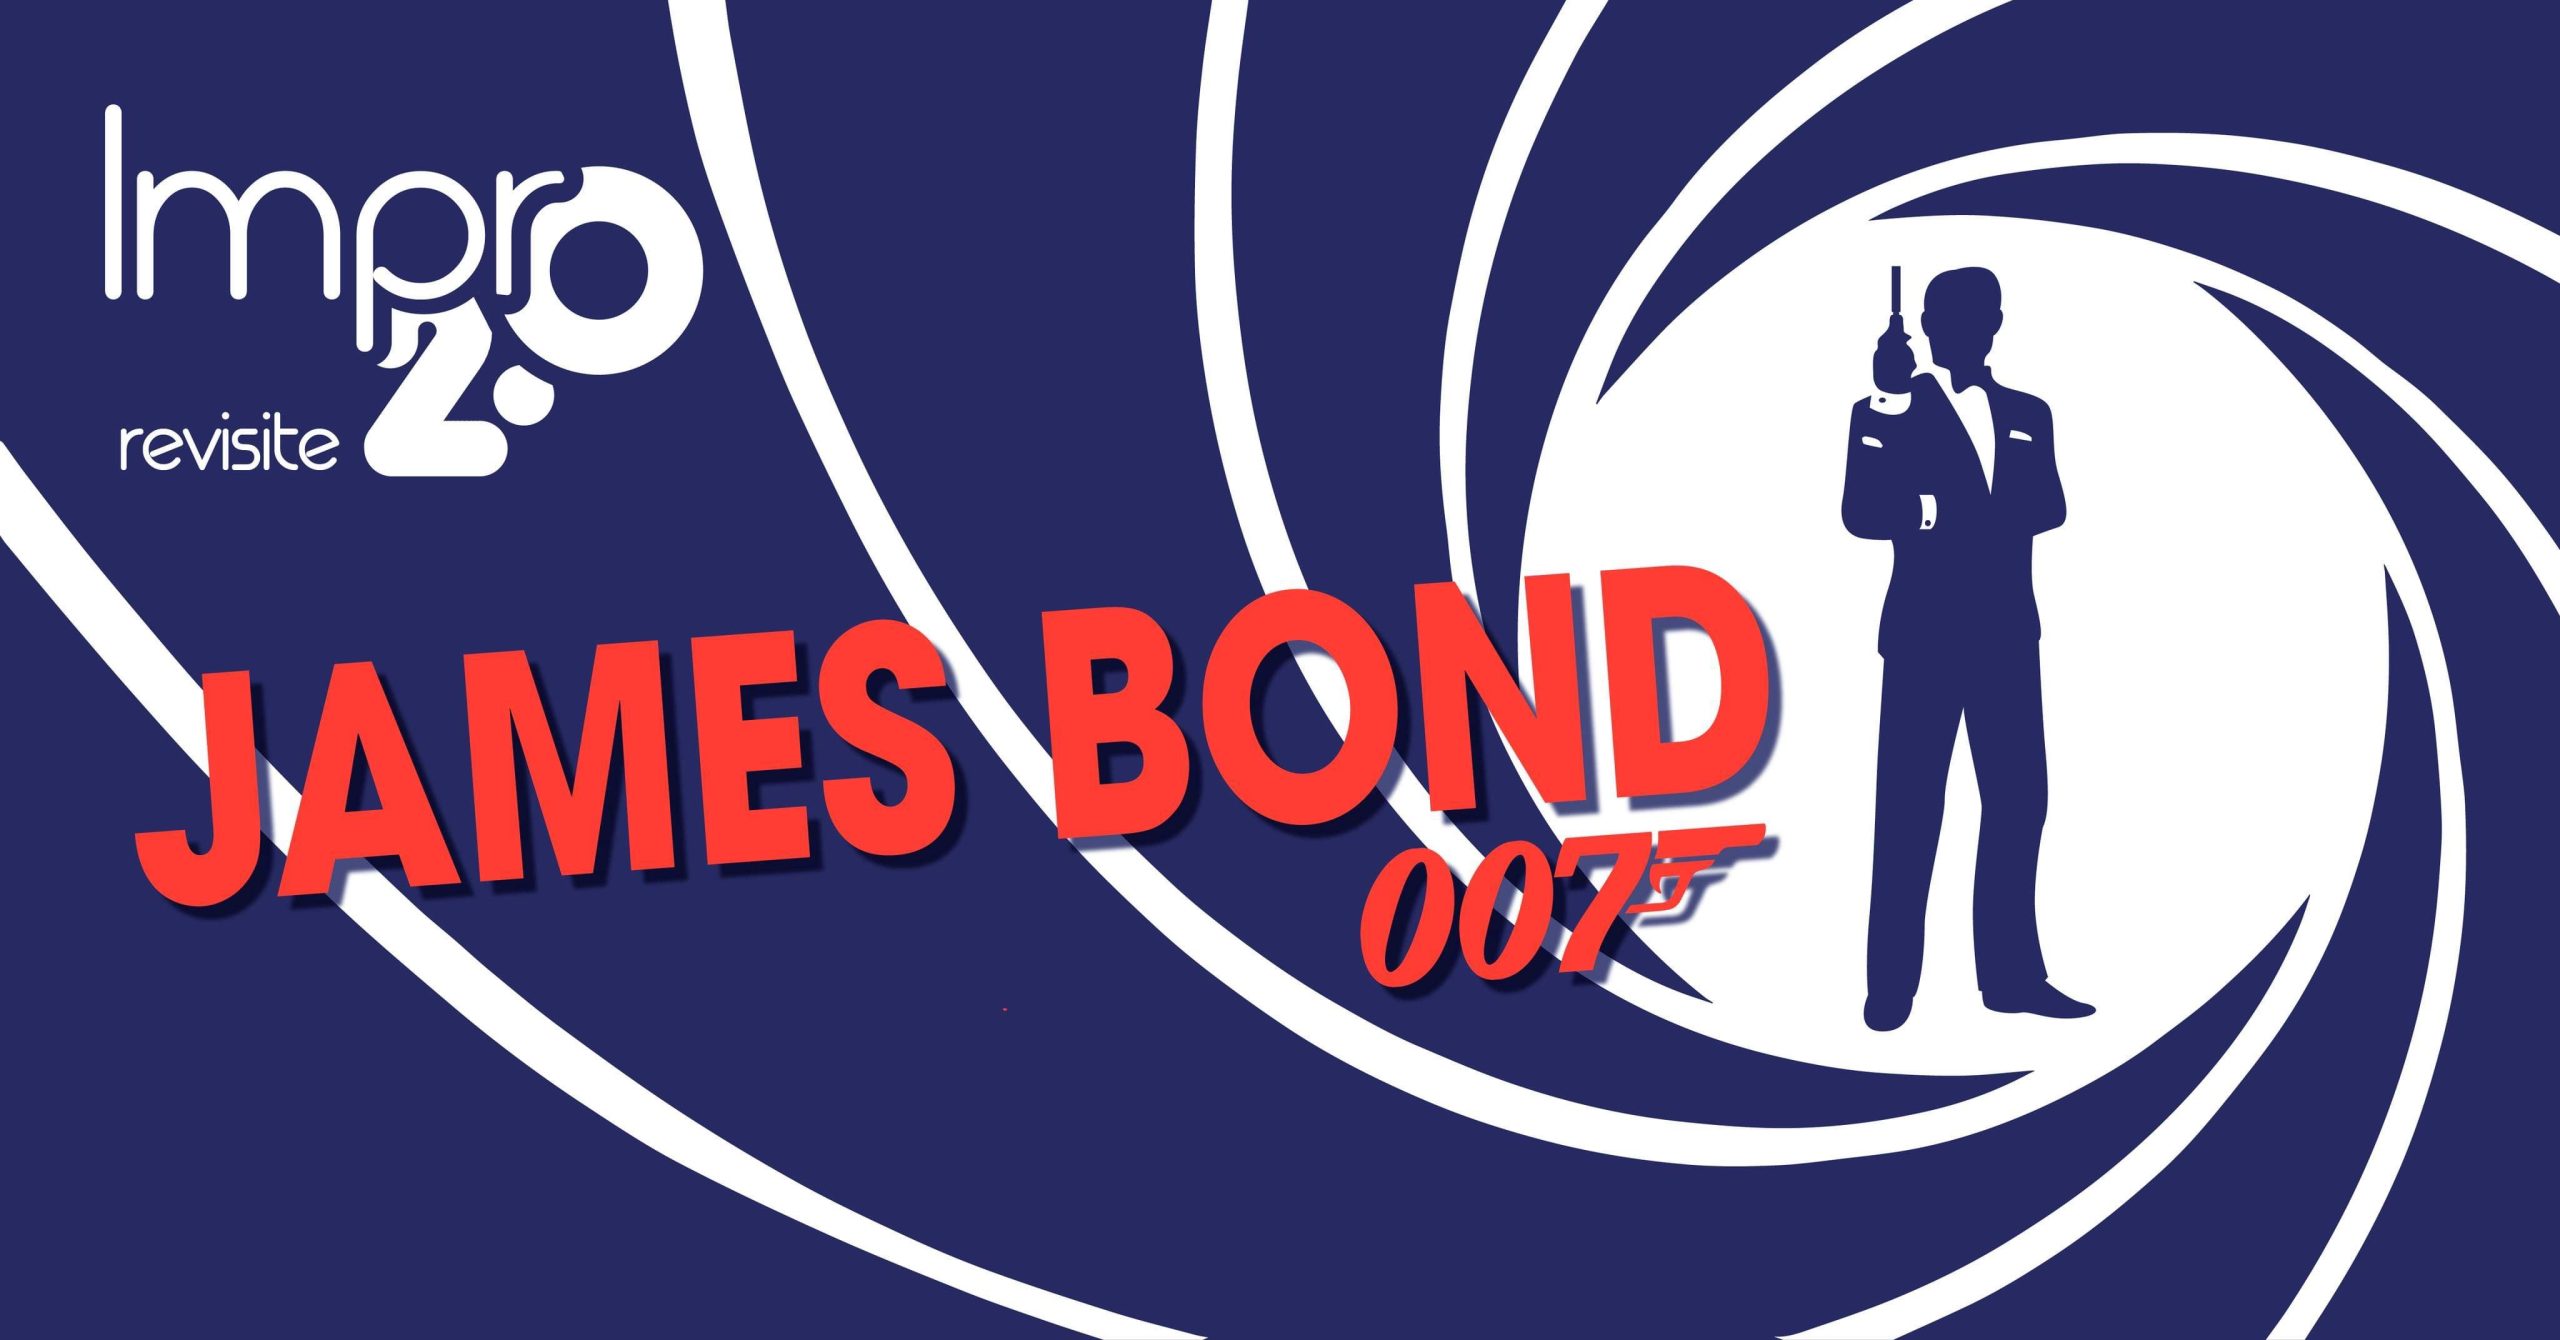 Impro 2.0 James Bond